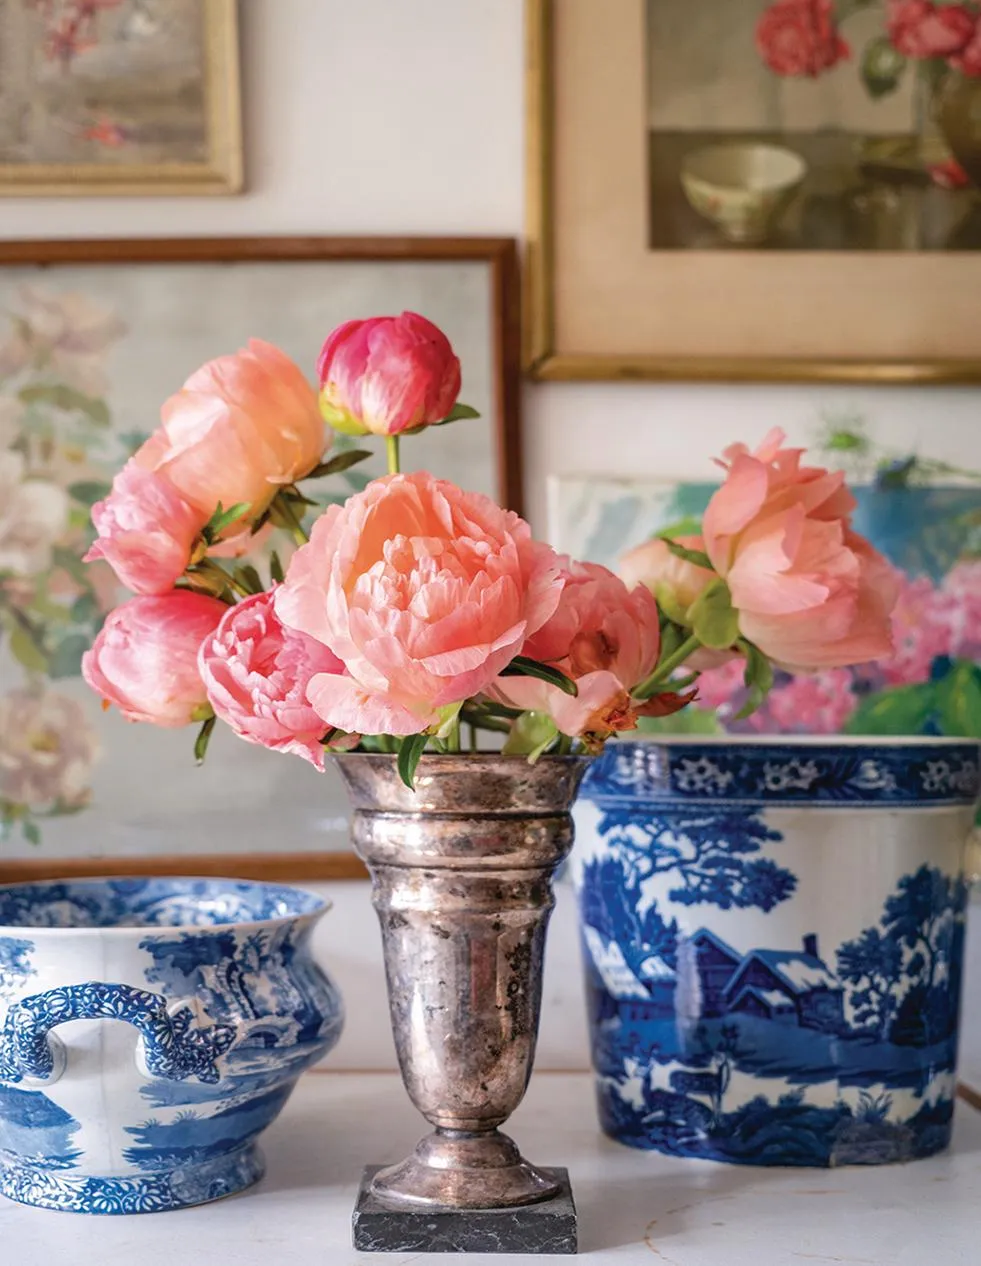 Wardington Manor: blue & white china and display of Peonies.